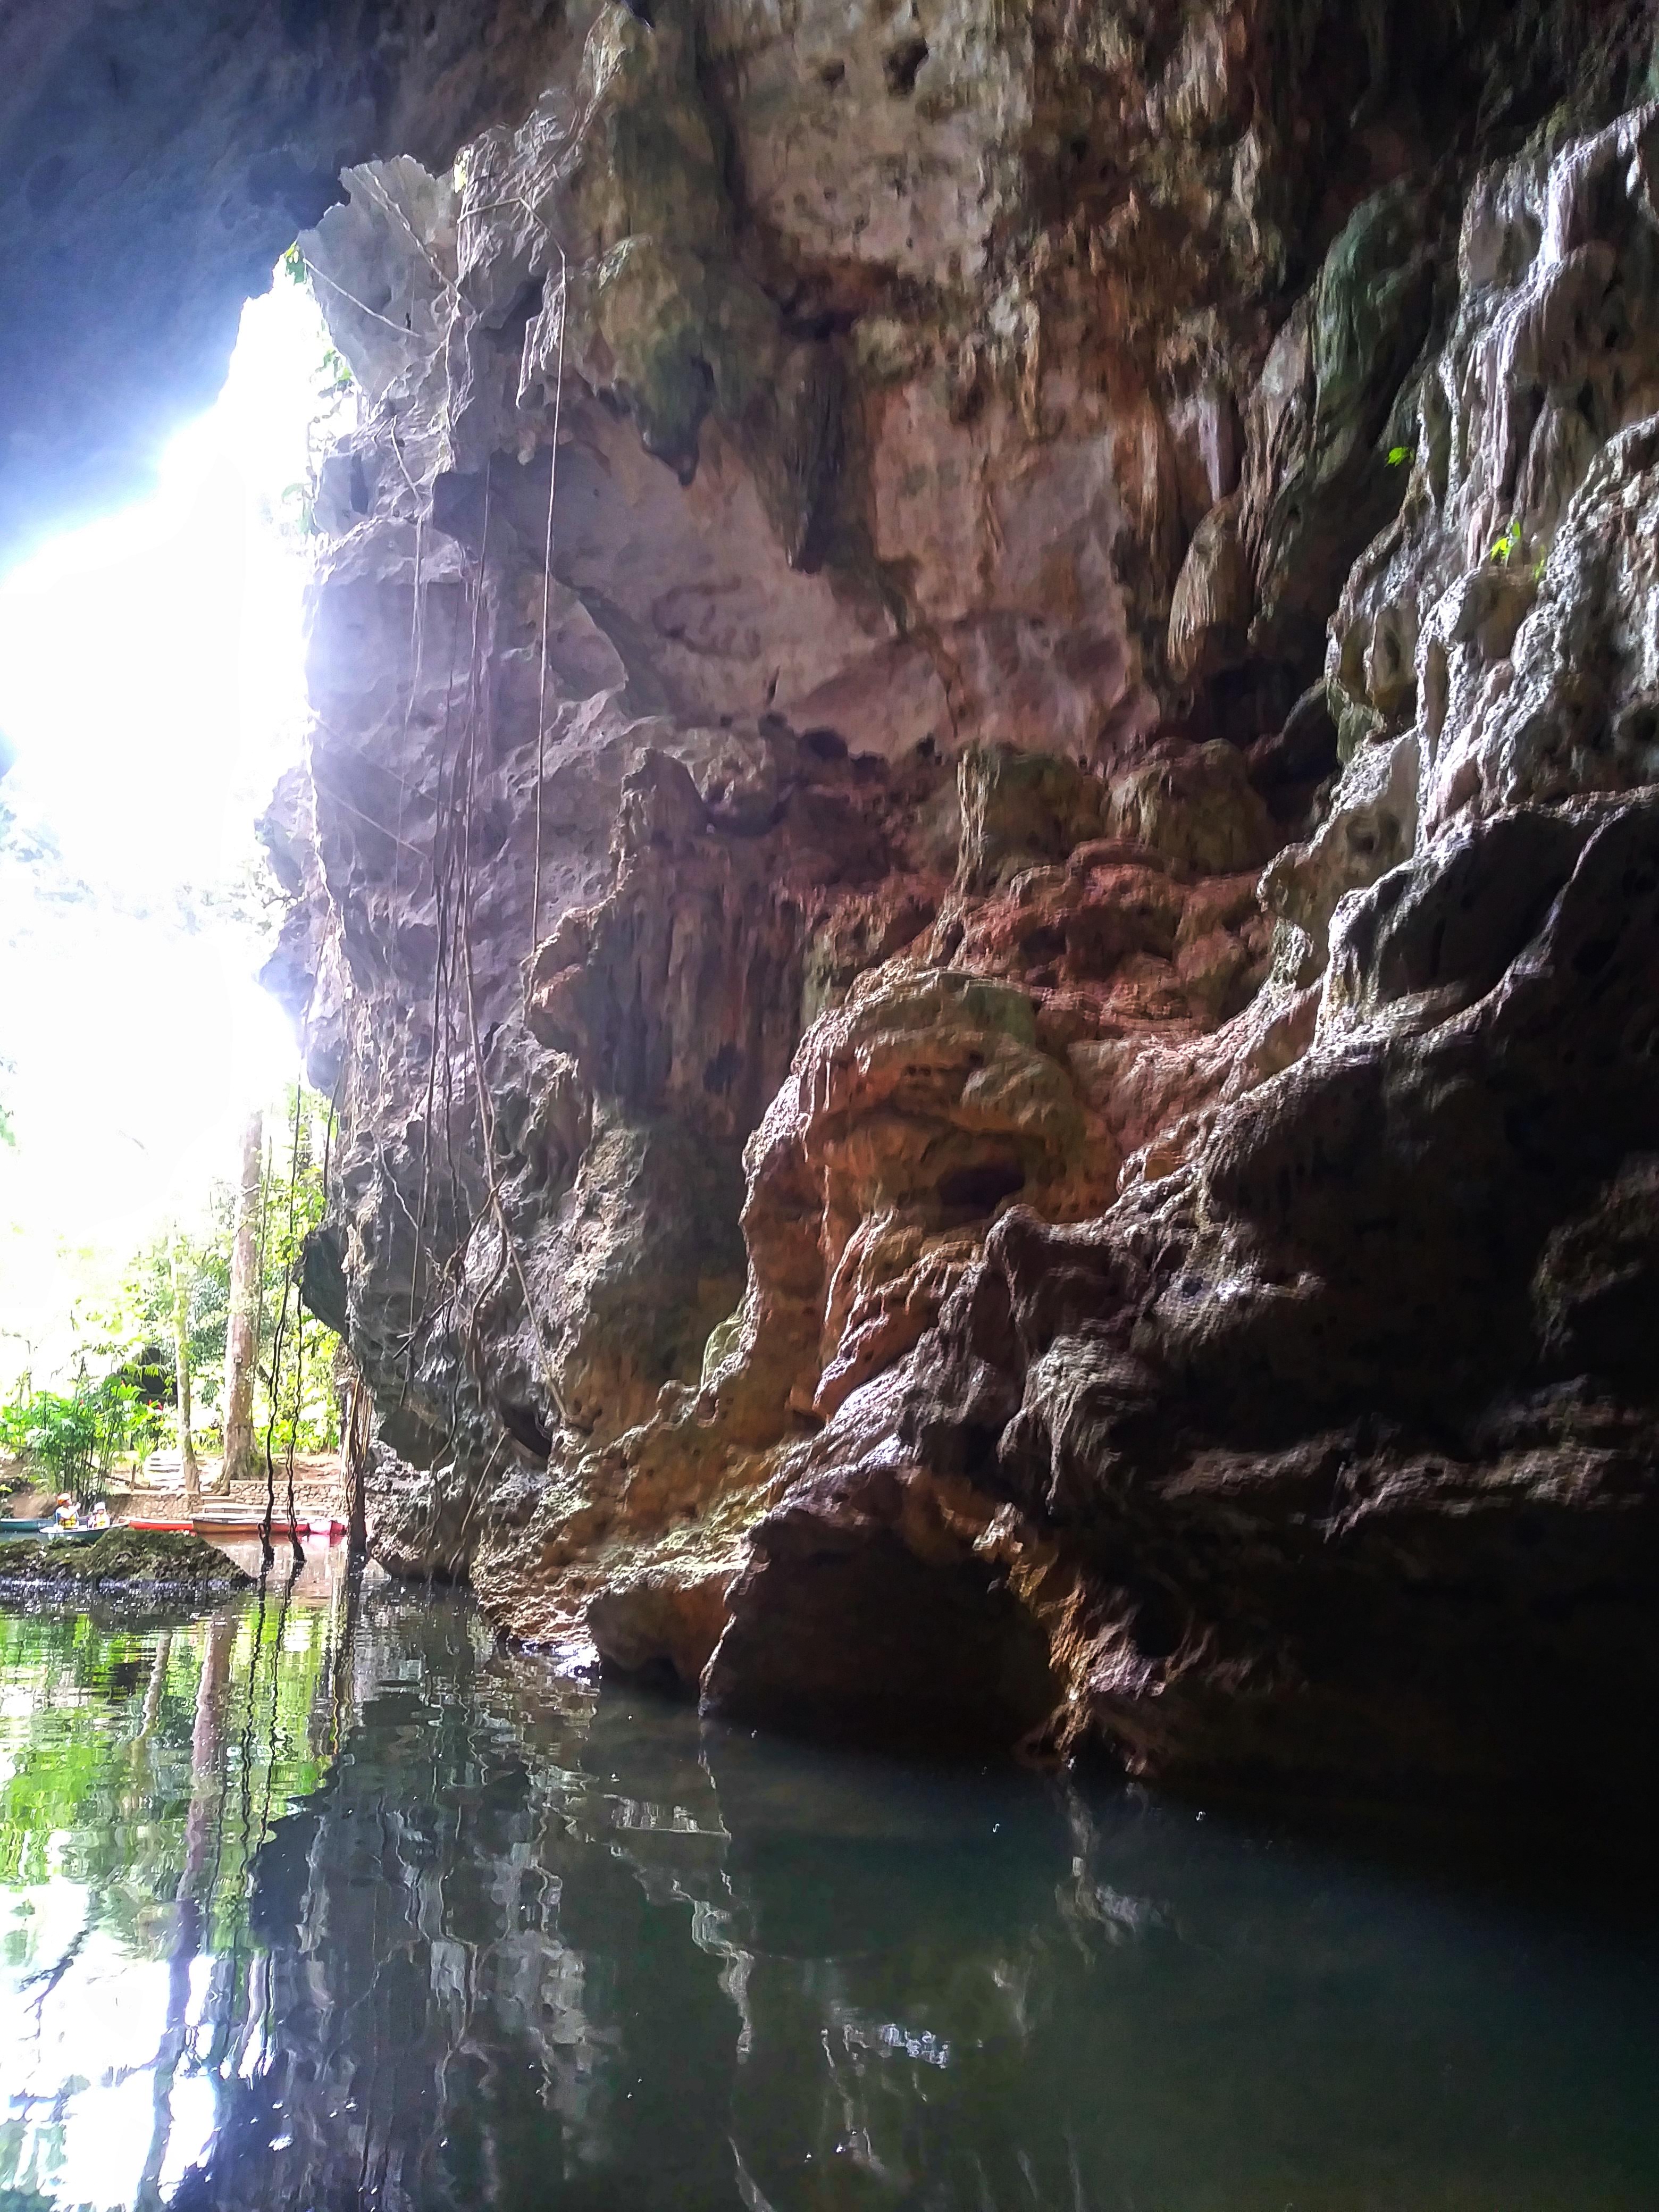 barton creek cave belize